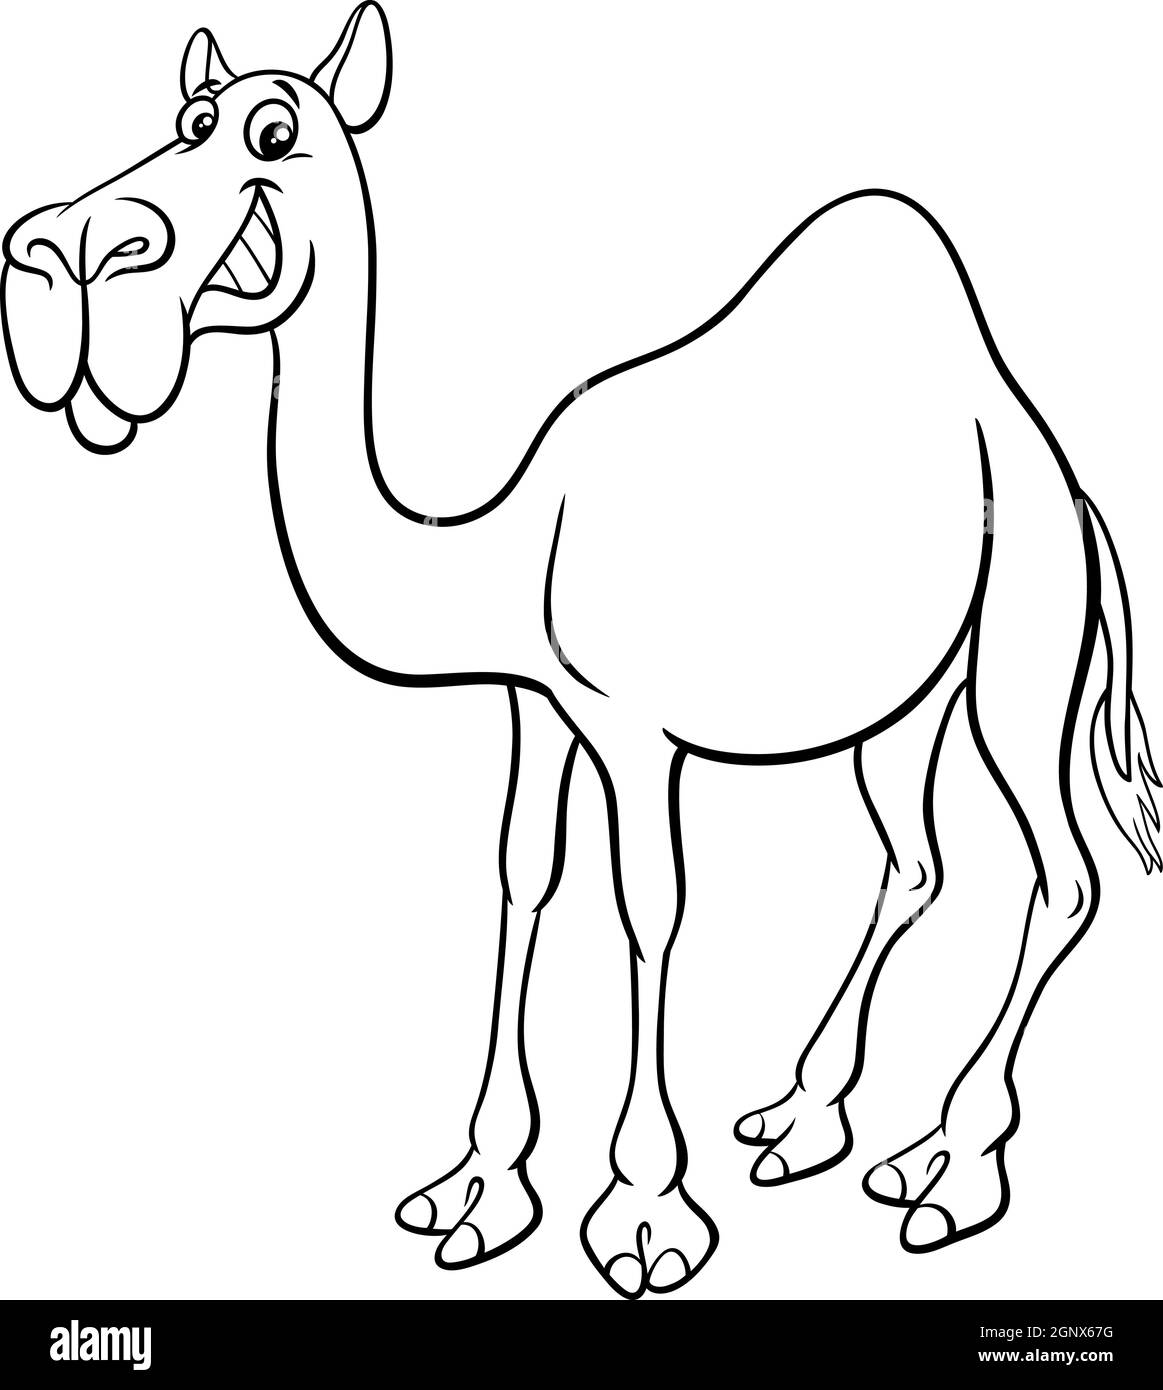 dromedary camel cartoon animal character coloring book page Stock Vector